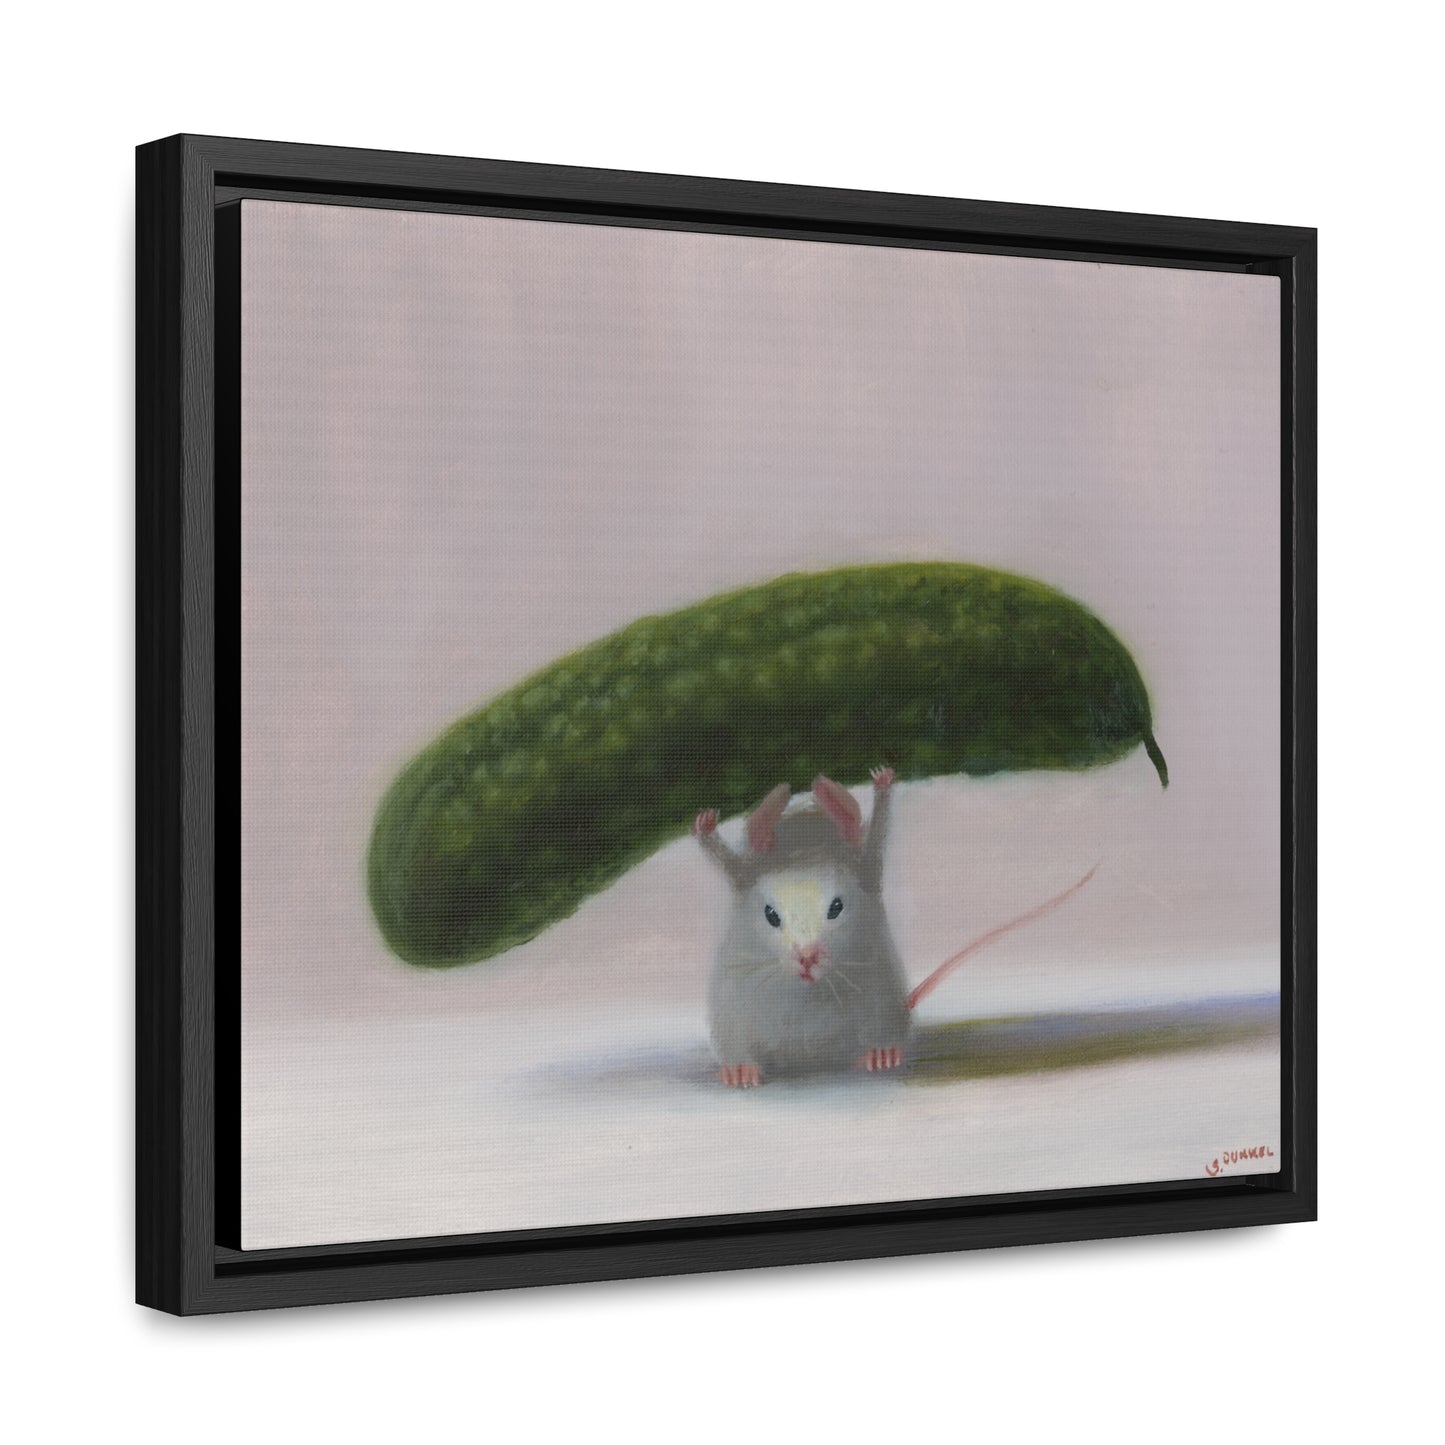 Stuart Dunkel: "Obsessed" - Framed Canvas Reproduction